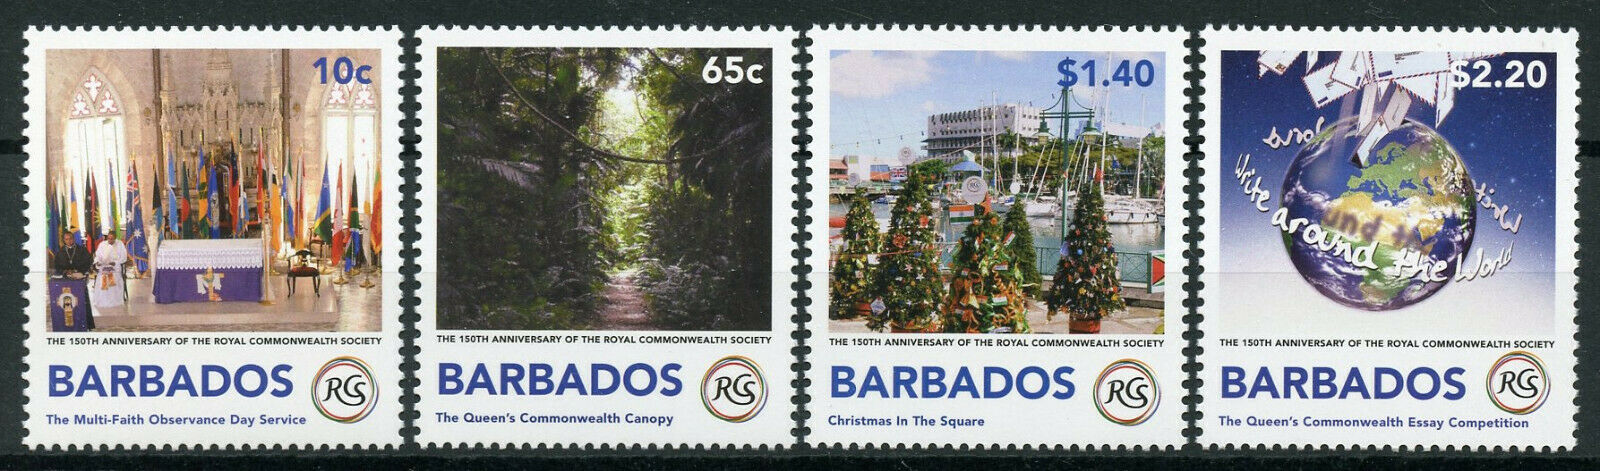 Barbados 2018 MNH Organizations Stamps Royal Commonwealth Society Christmas Trees 4v Set